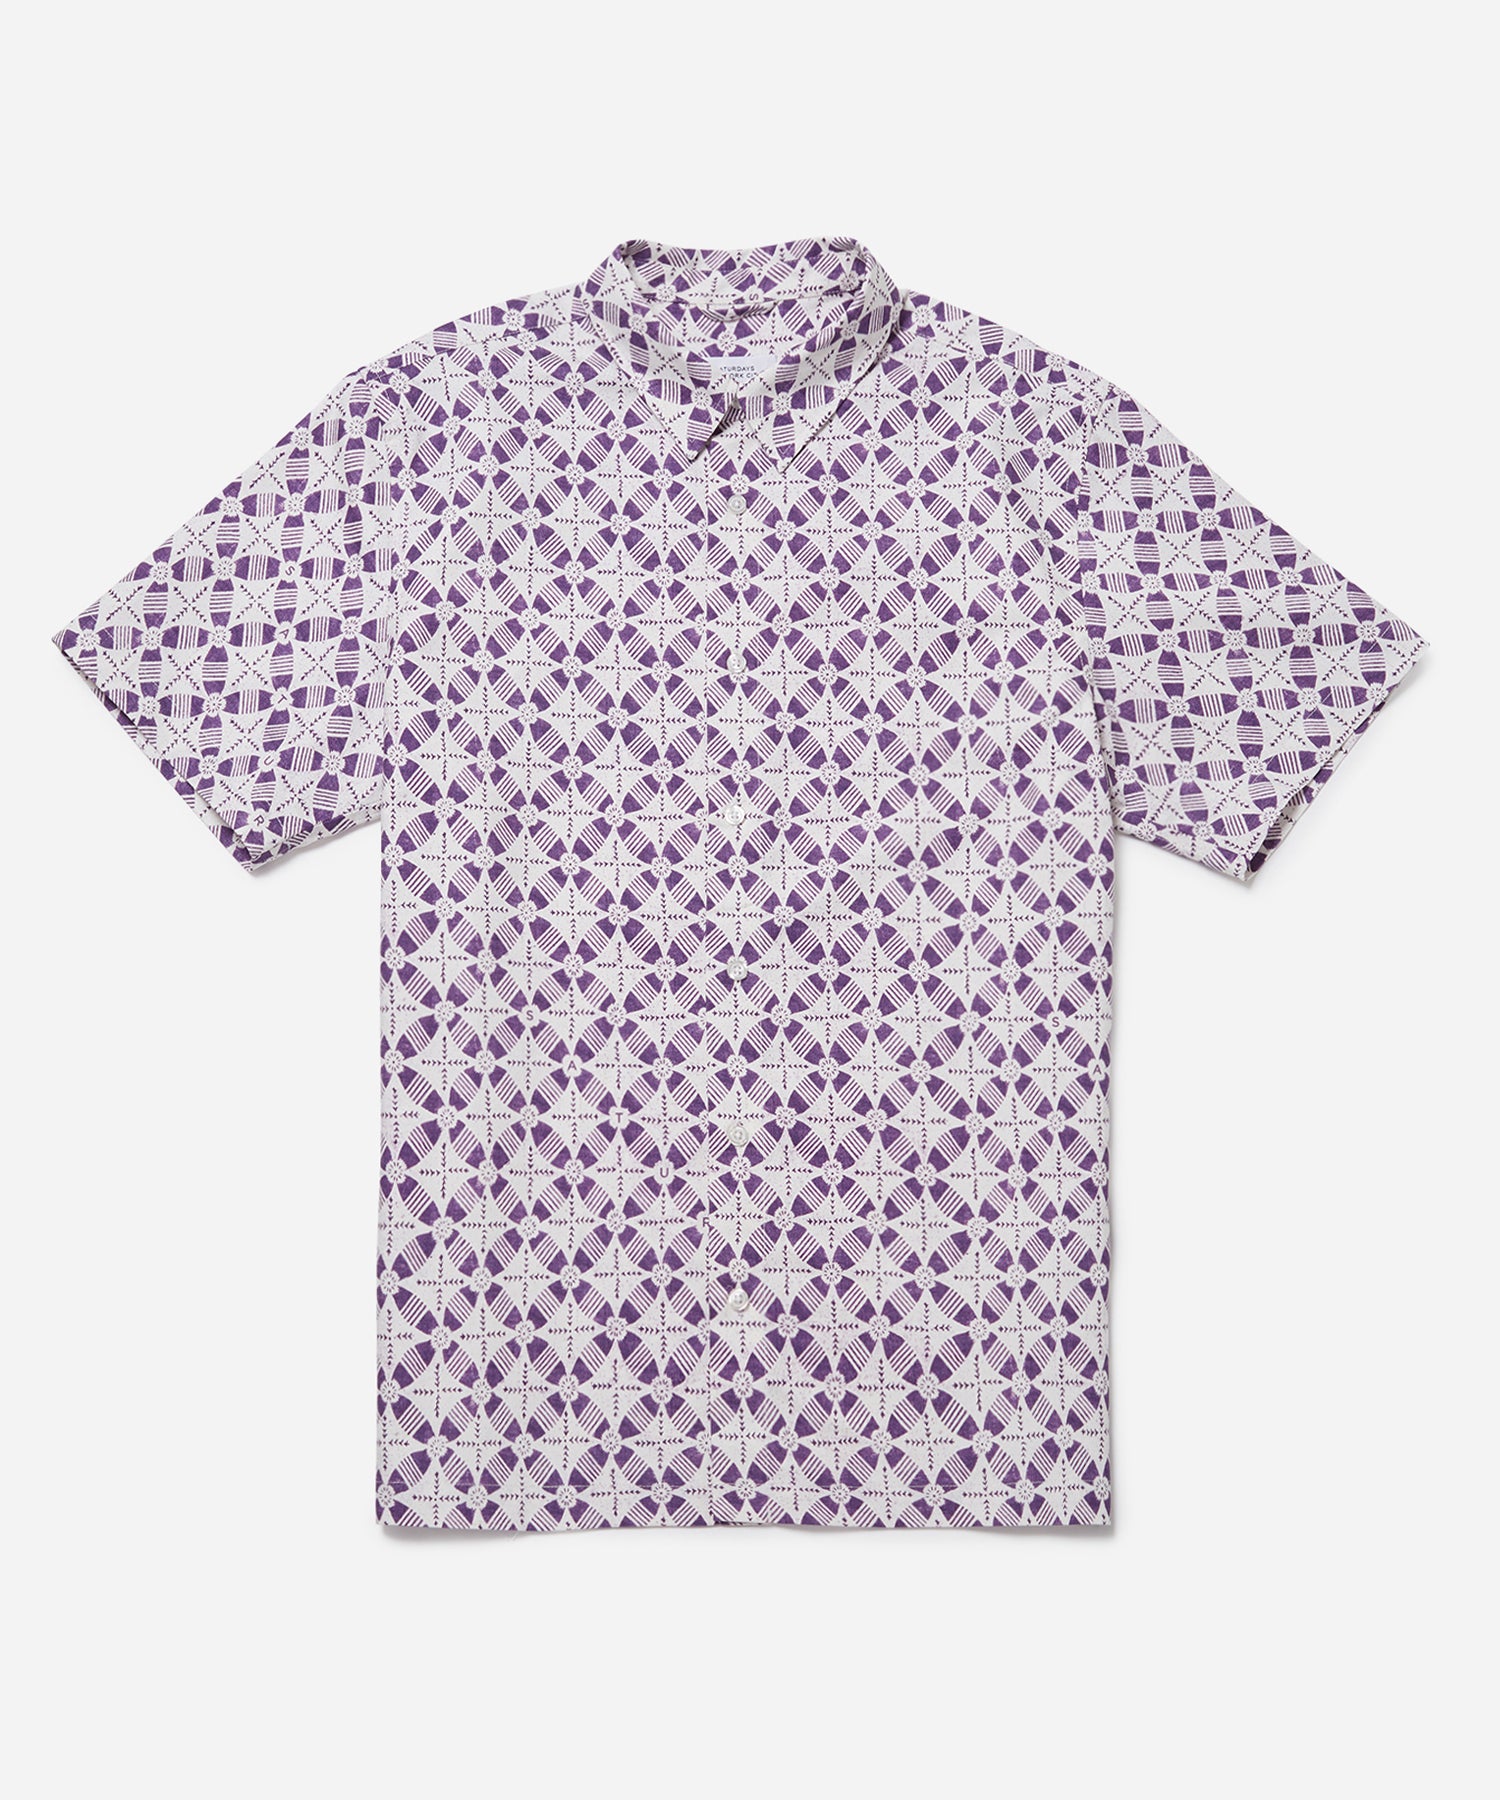 Saturdays NYC Remixes the Camp-Collar Shirt With Iridescent Style